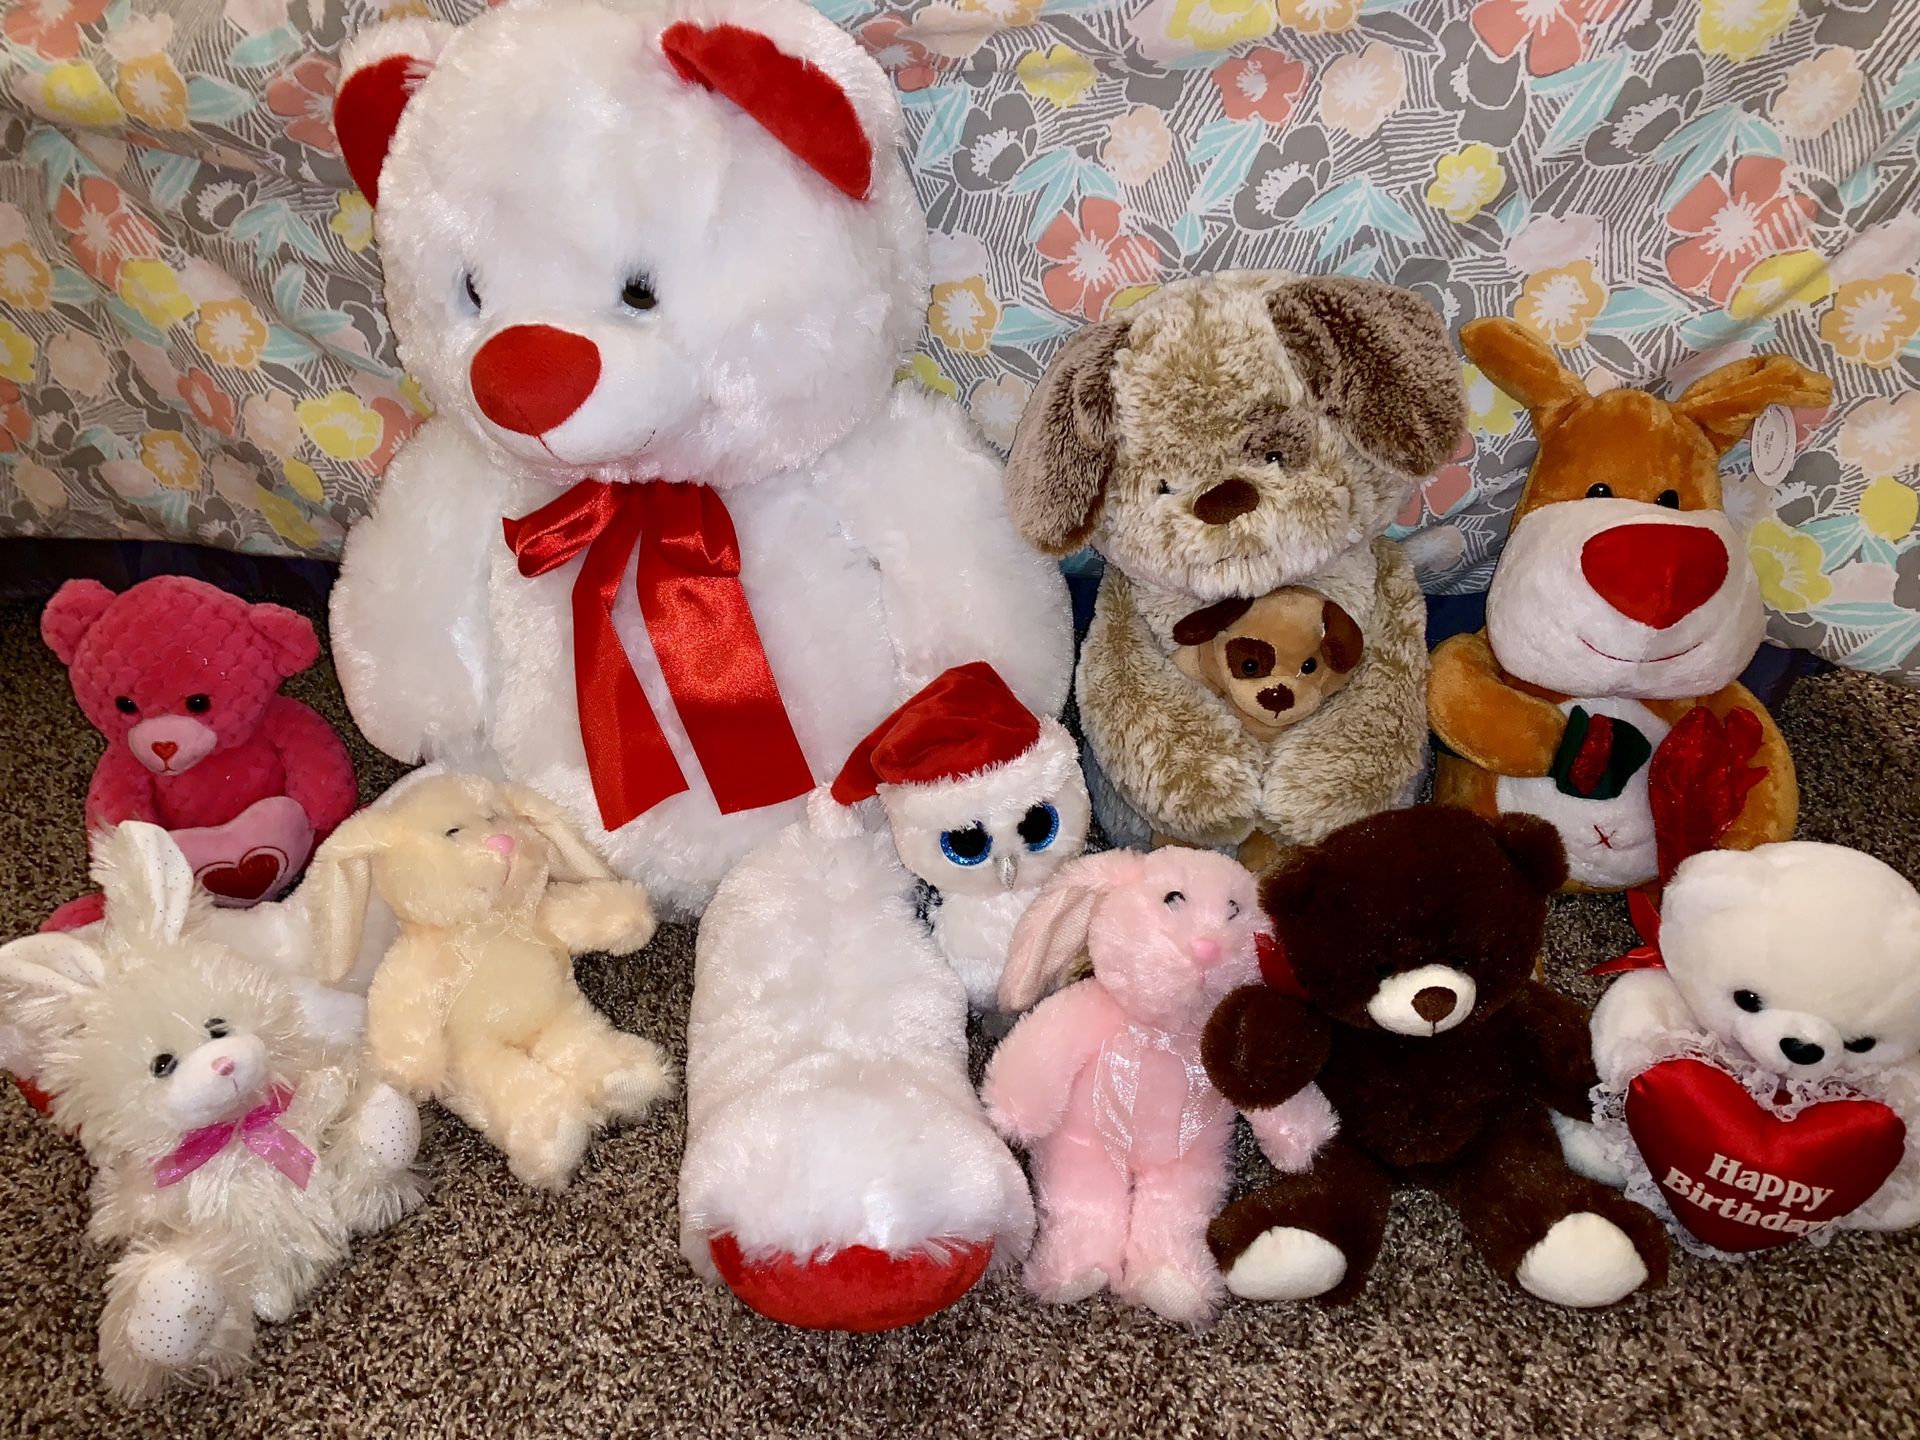 Stuffed animals / teddy bears